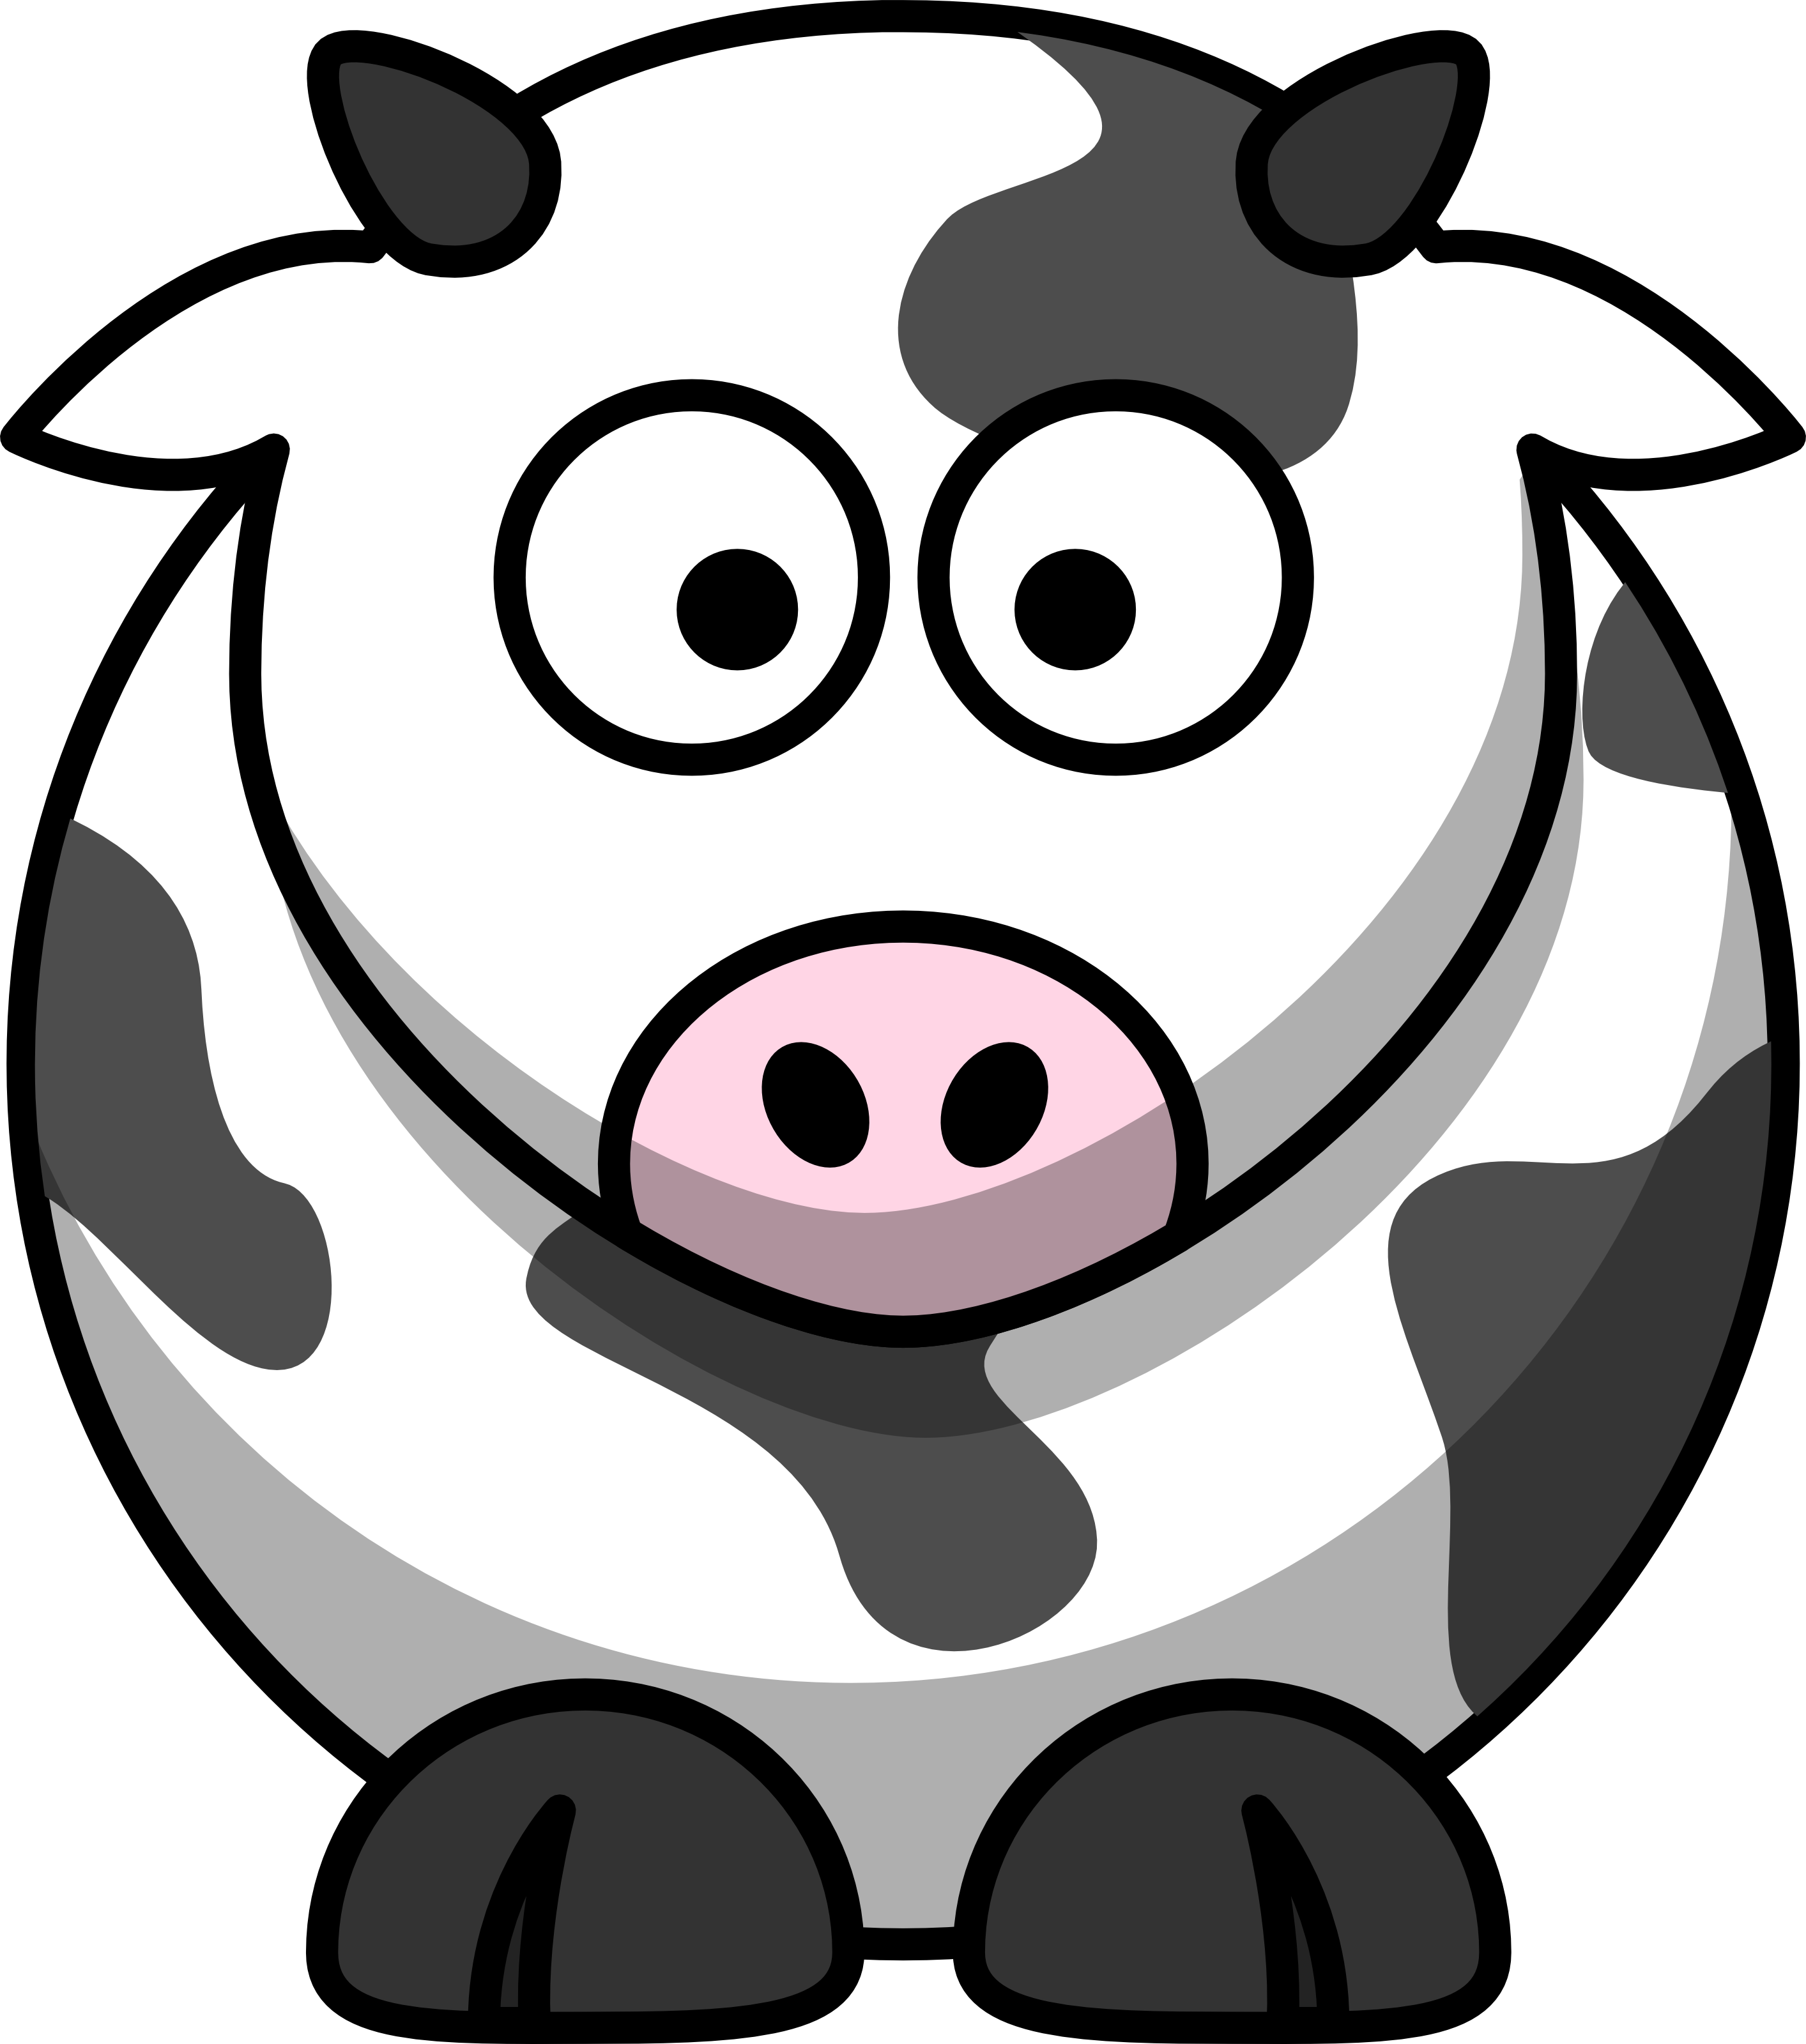 Free Cartoon Cow Clip Art by 000149 .